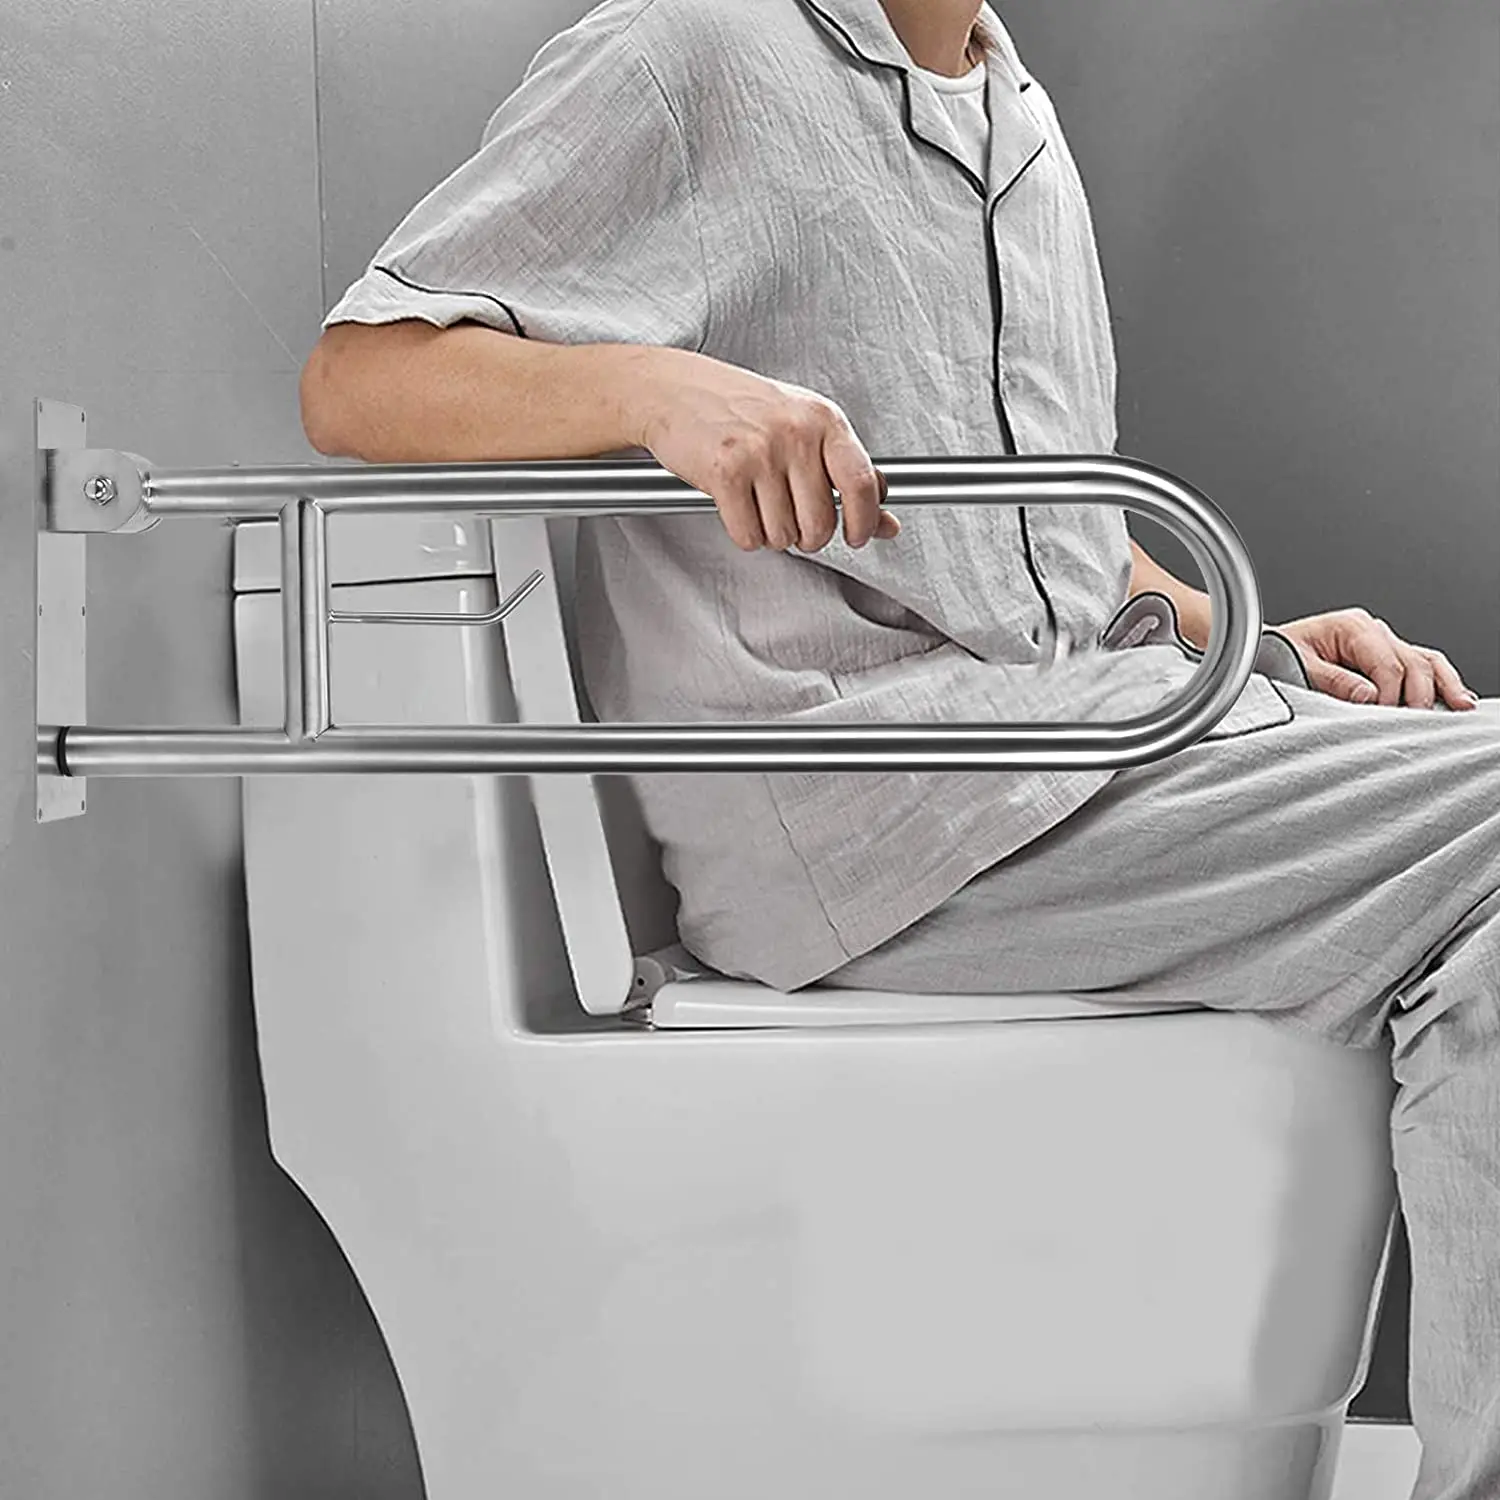 Customizes handicap grab bar for toilets bathroom handrail disabled bathroom arm rest folding toilet grab bar